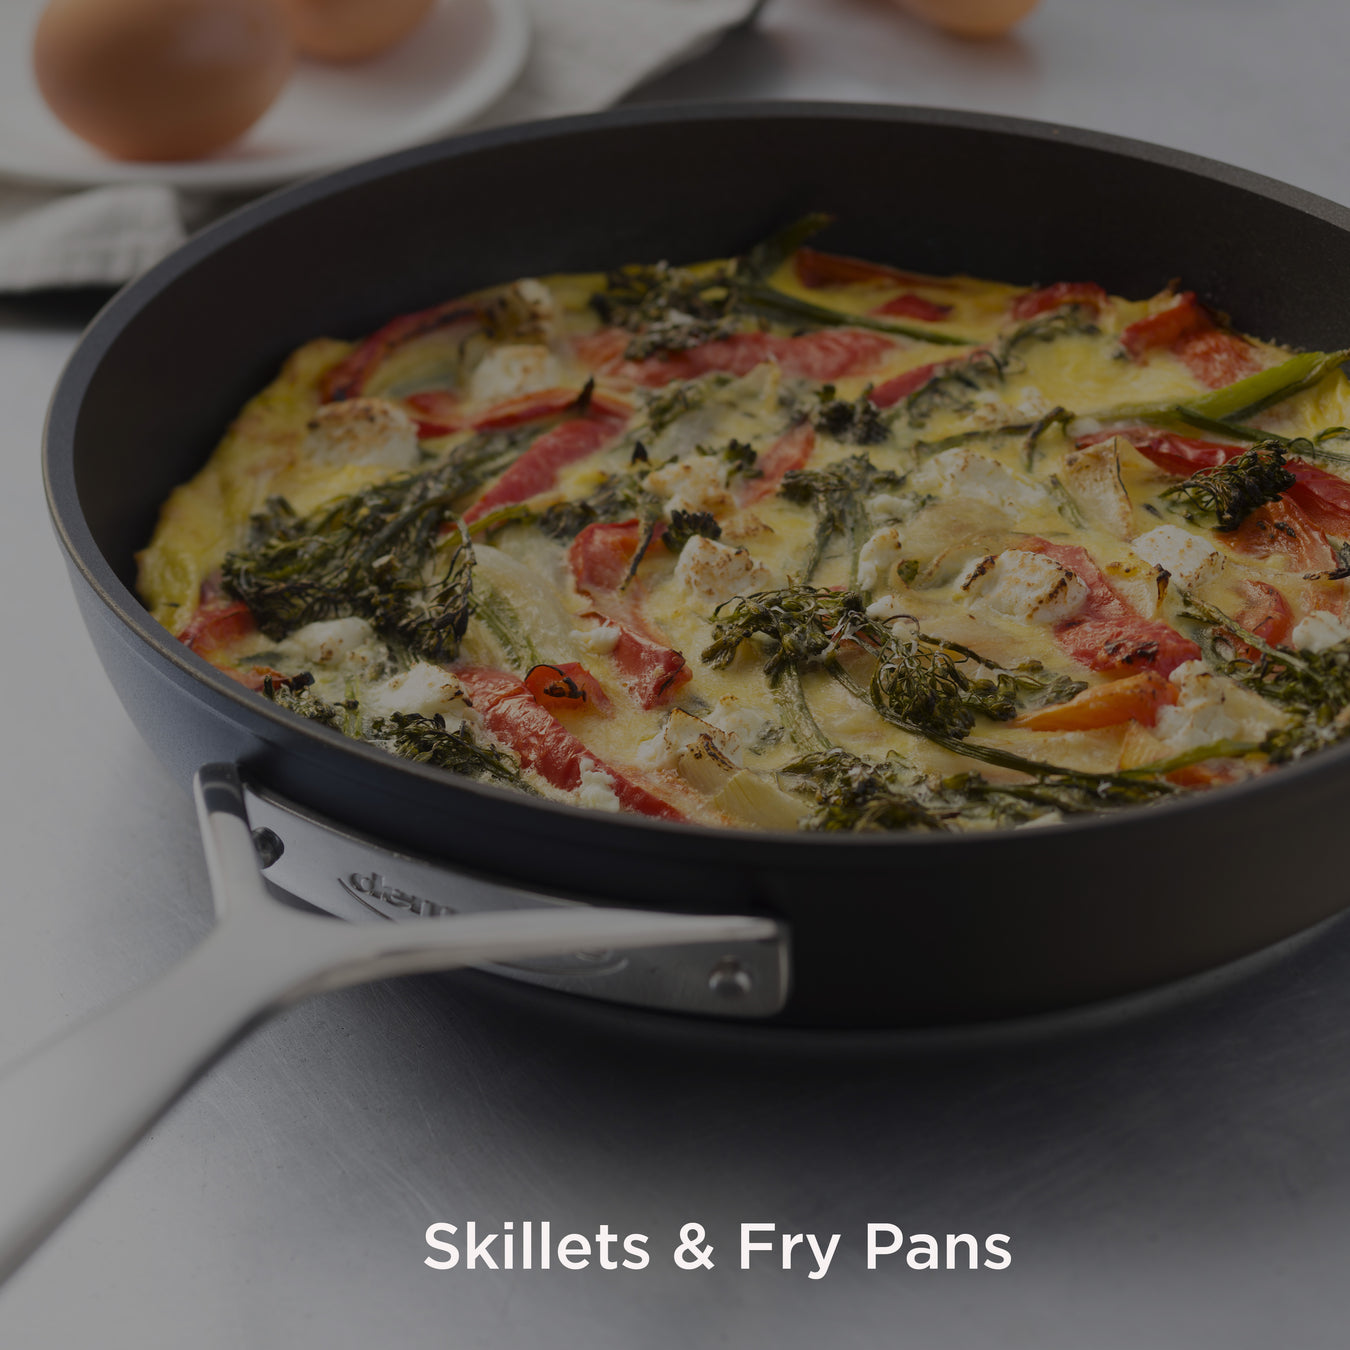 Skillets & Fry Pans